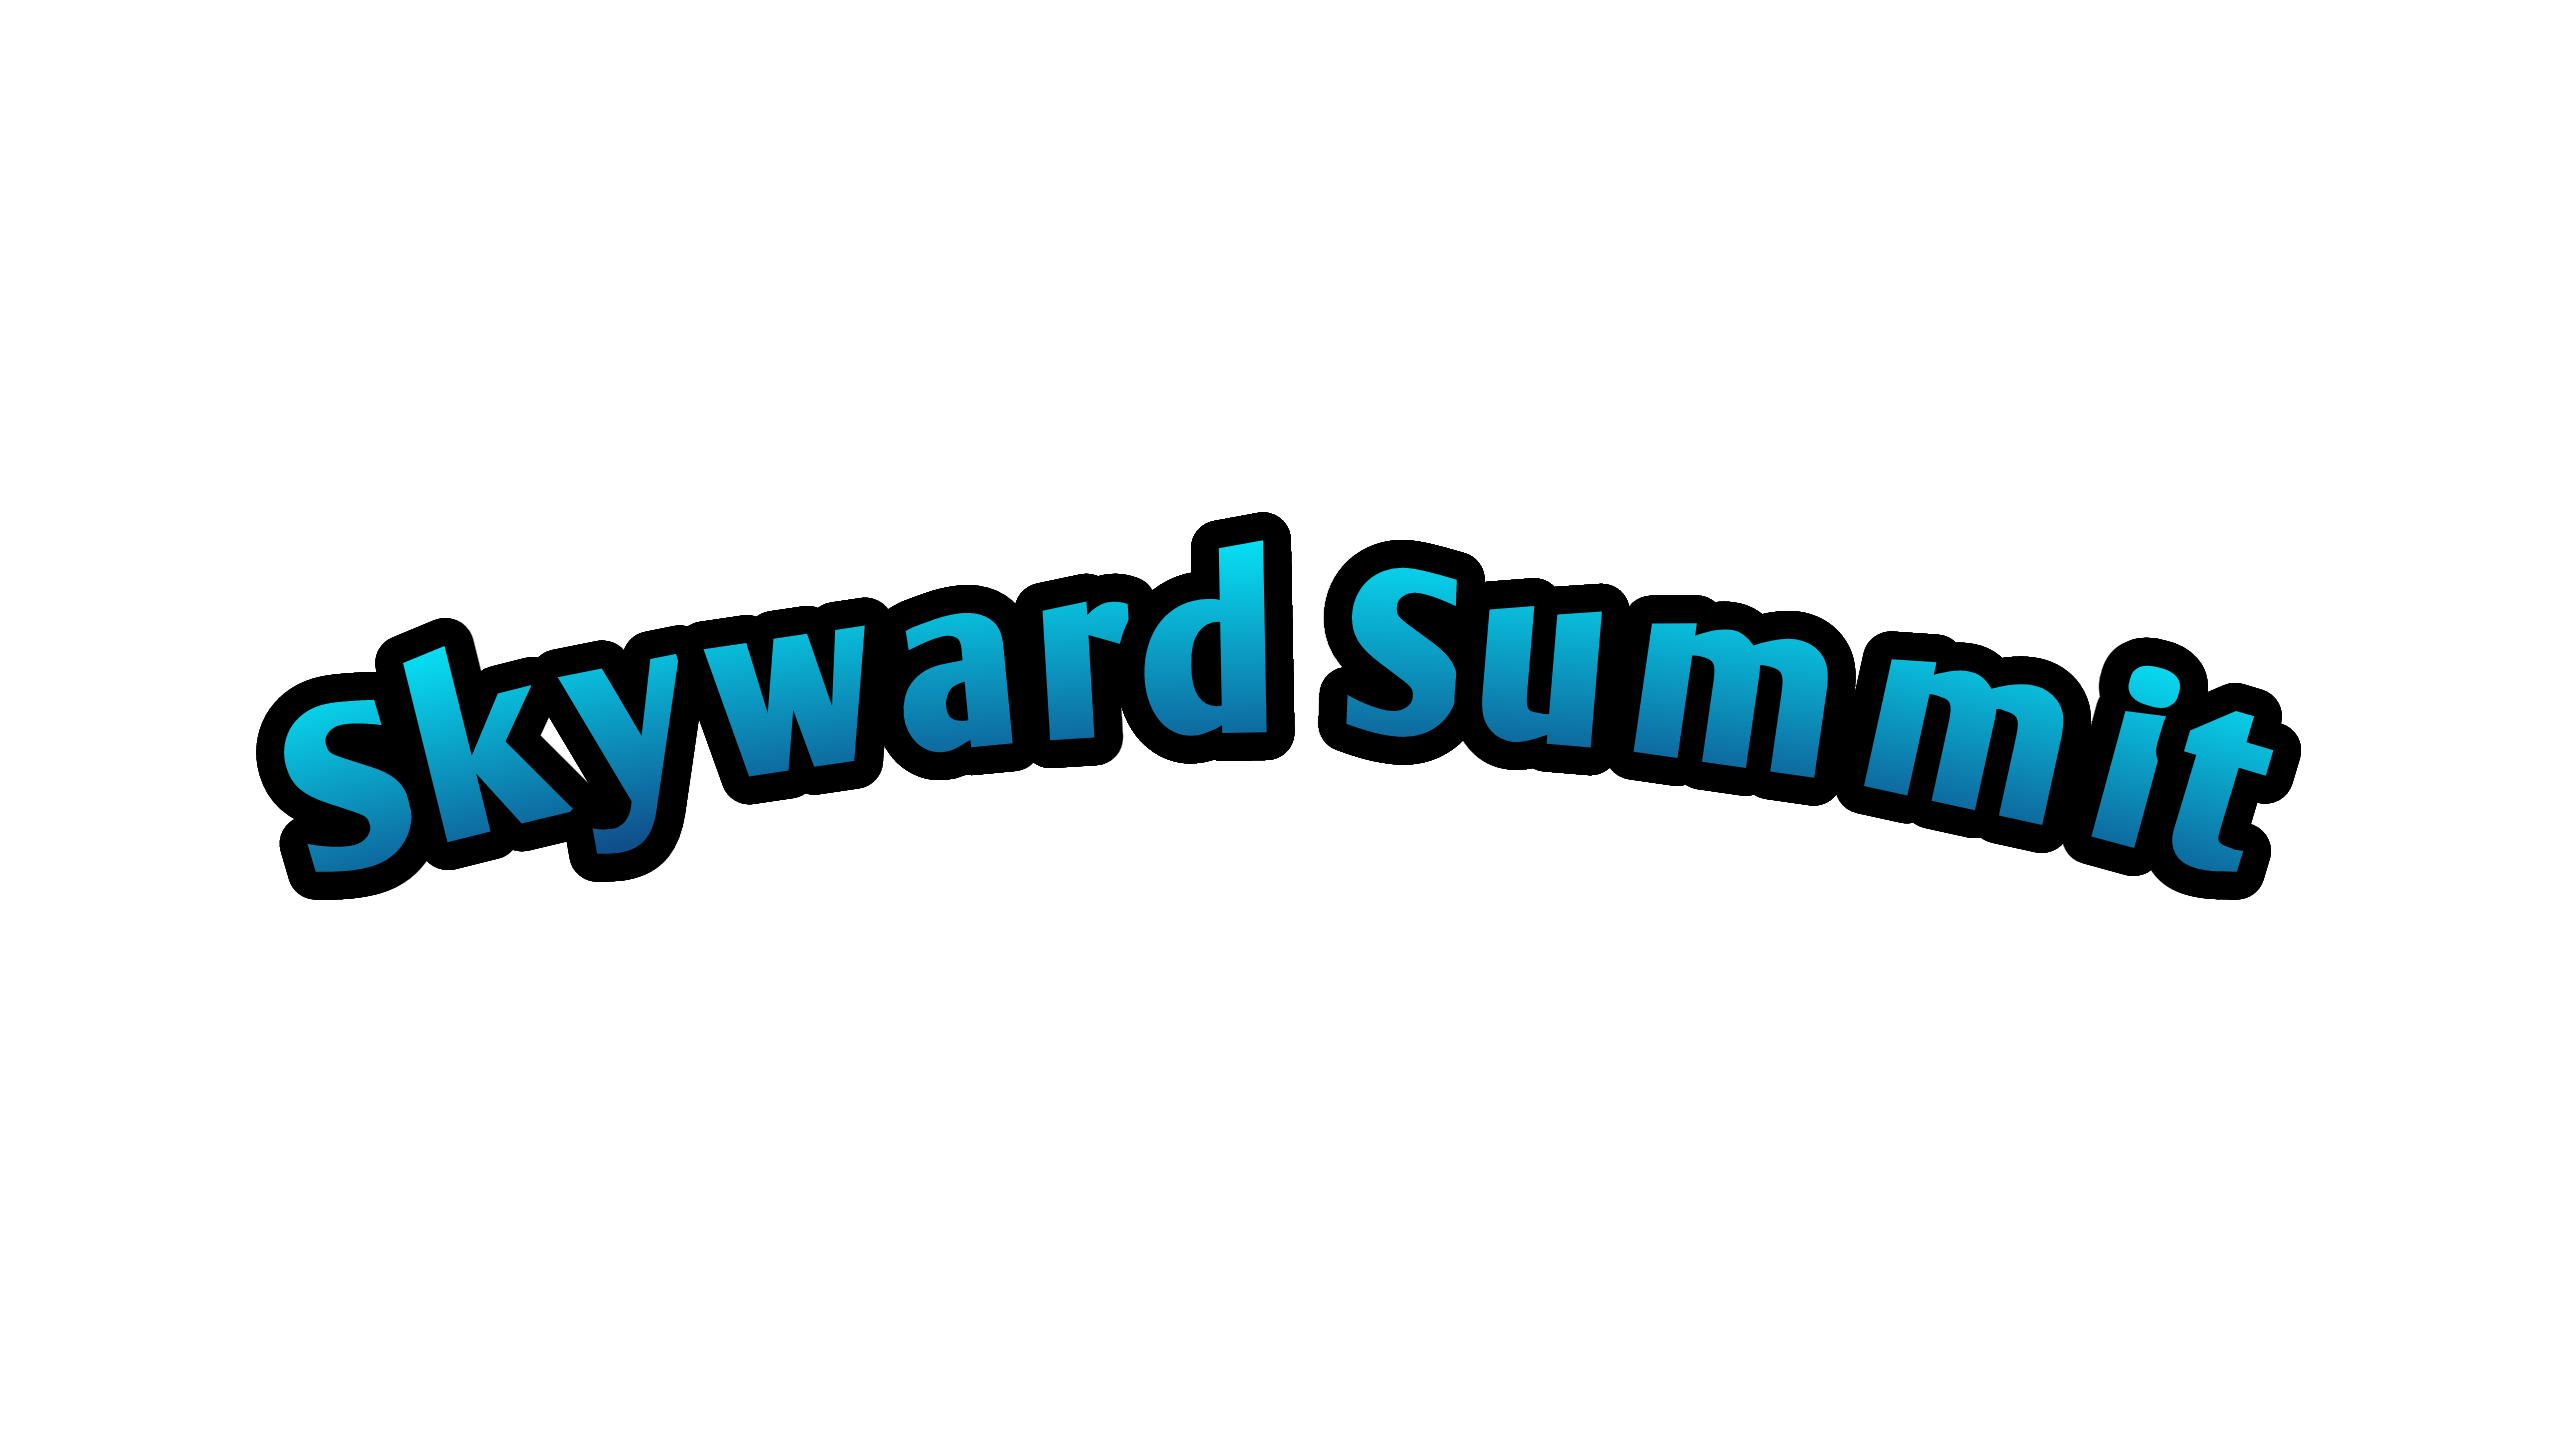 Skyward Summit